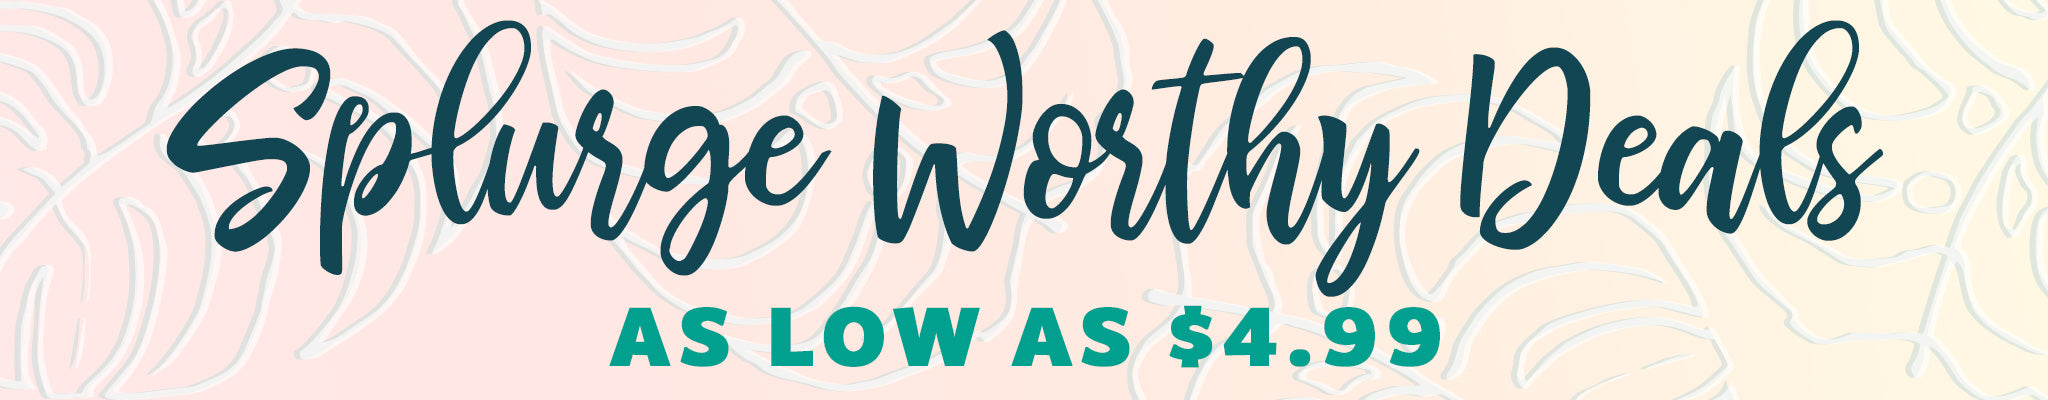 Splurge-Worthy Deals